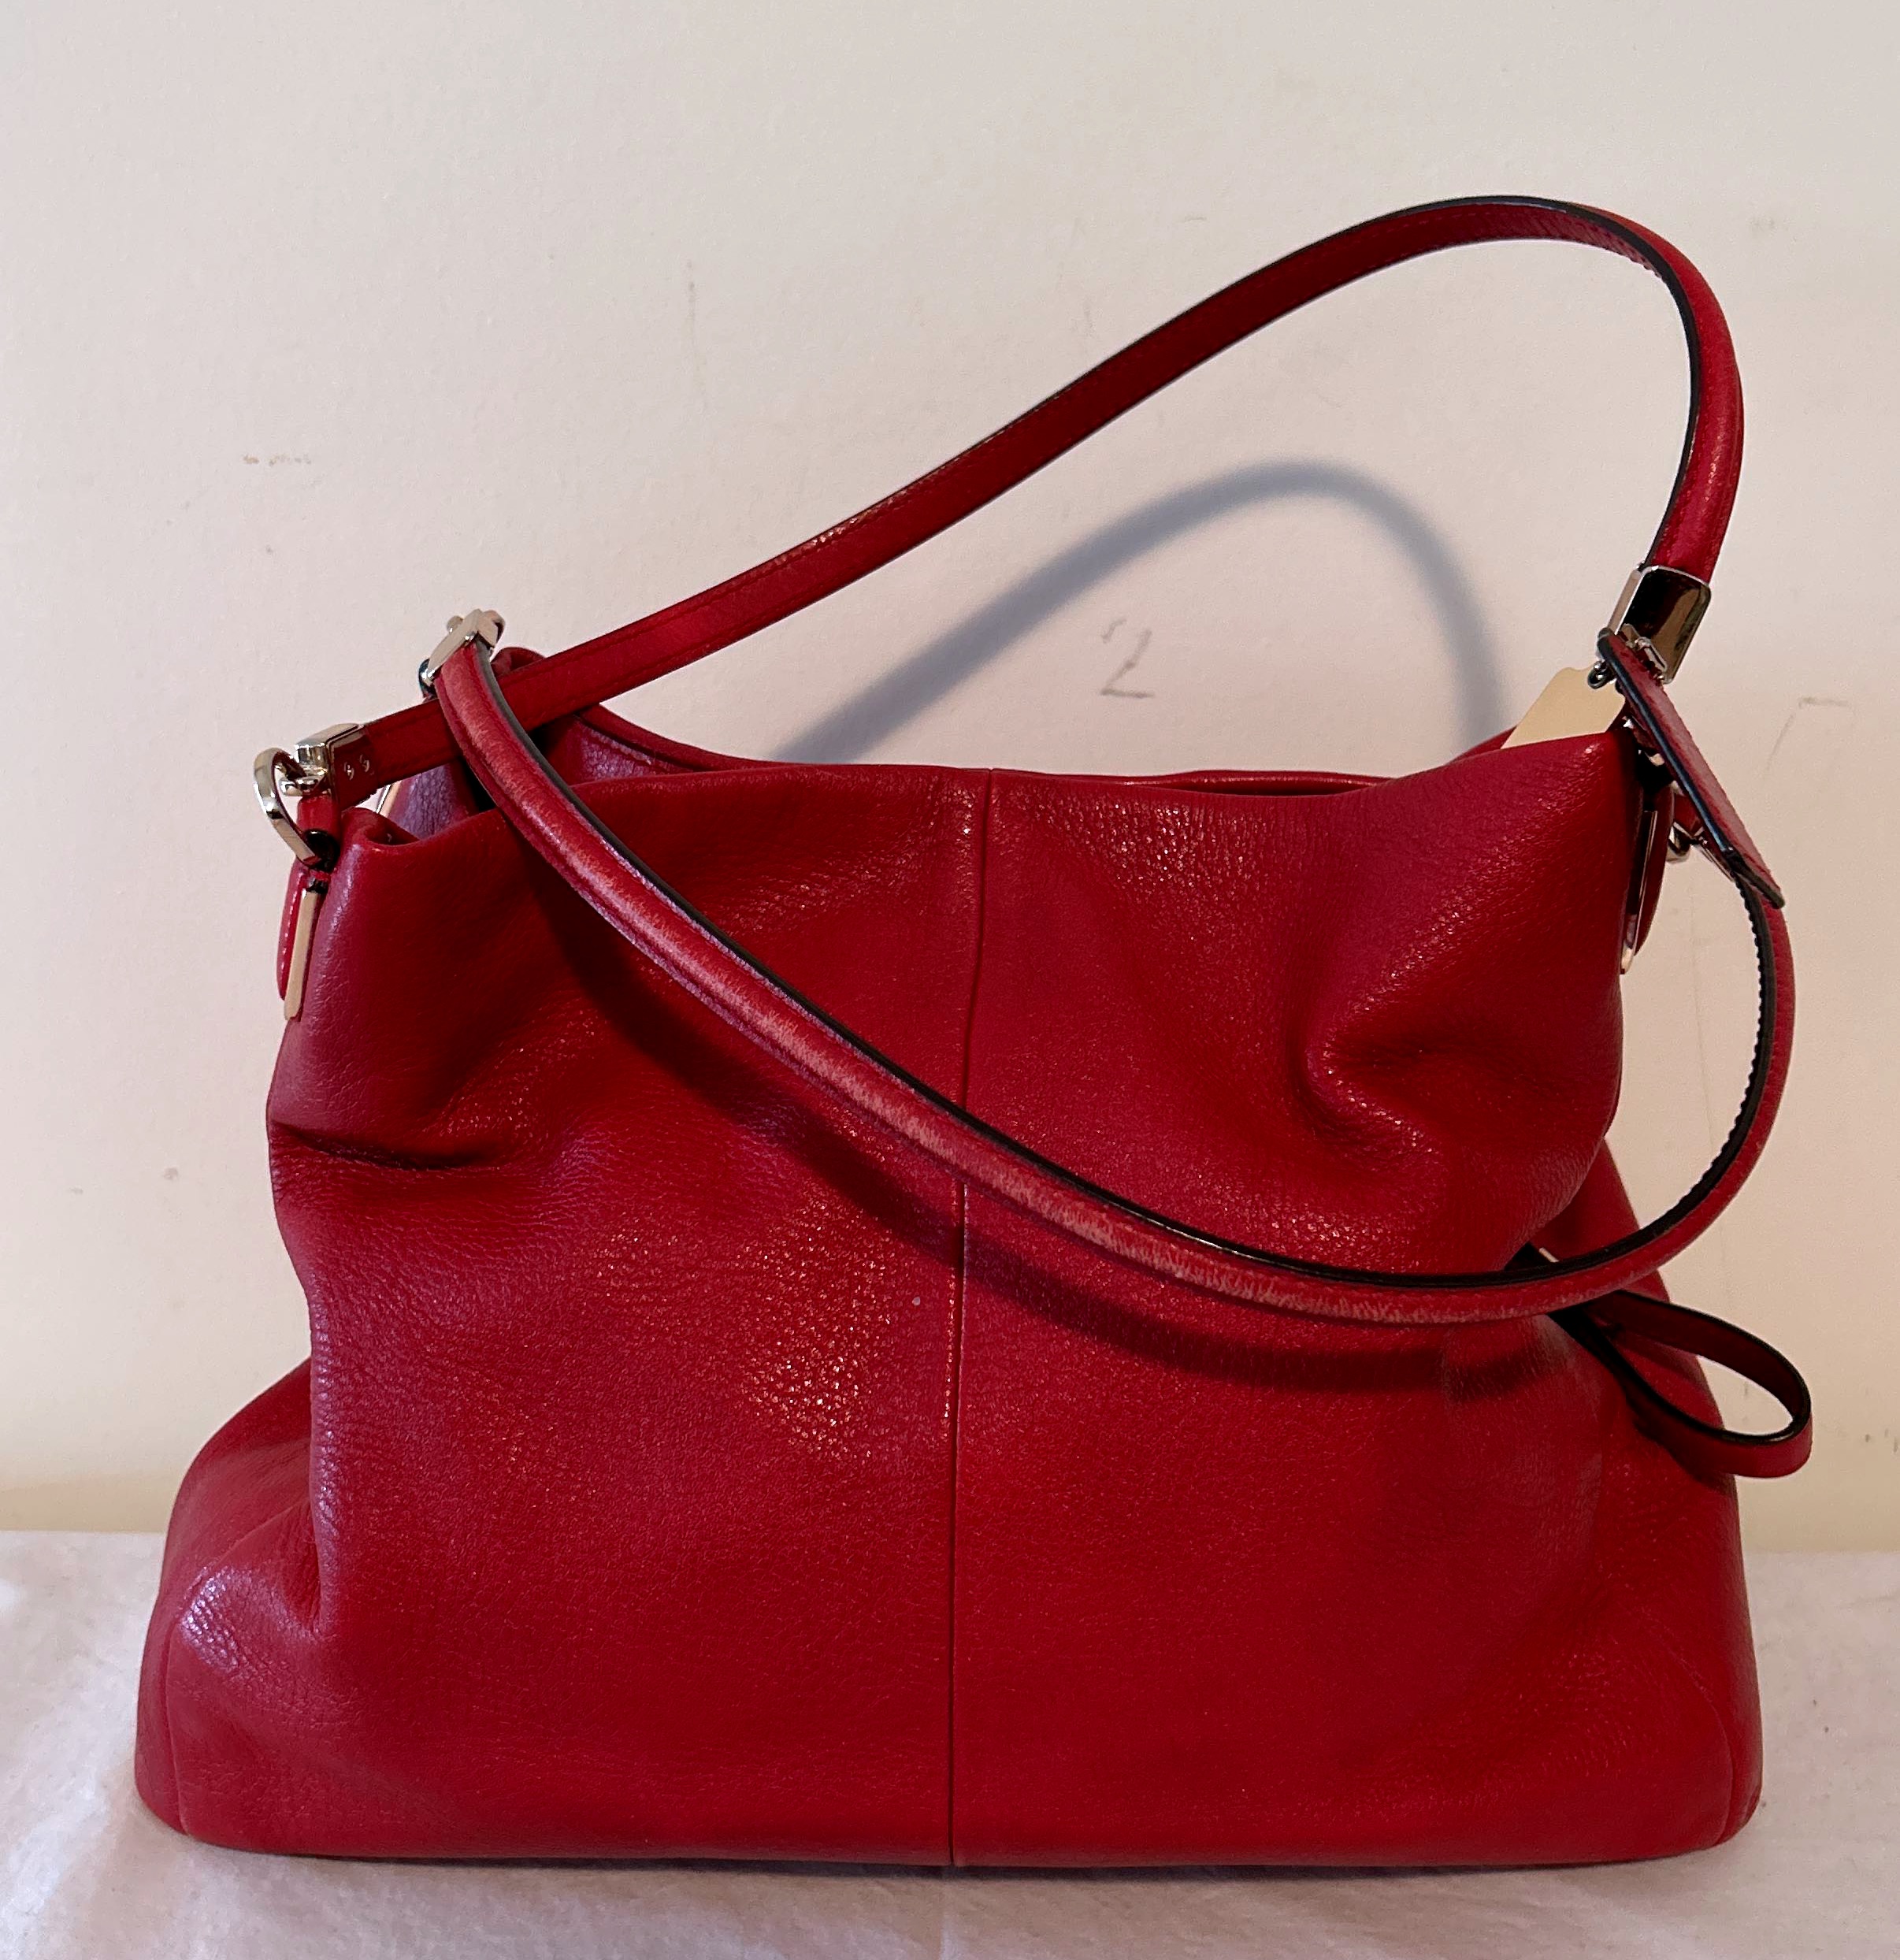 Women's Handbags & Purses for sale in Tulsa, Oklahoma | Facebook  Marketplace | Facebook